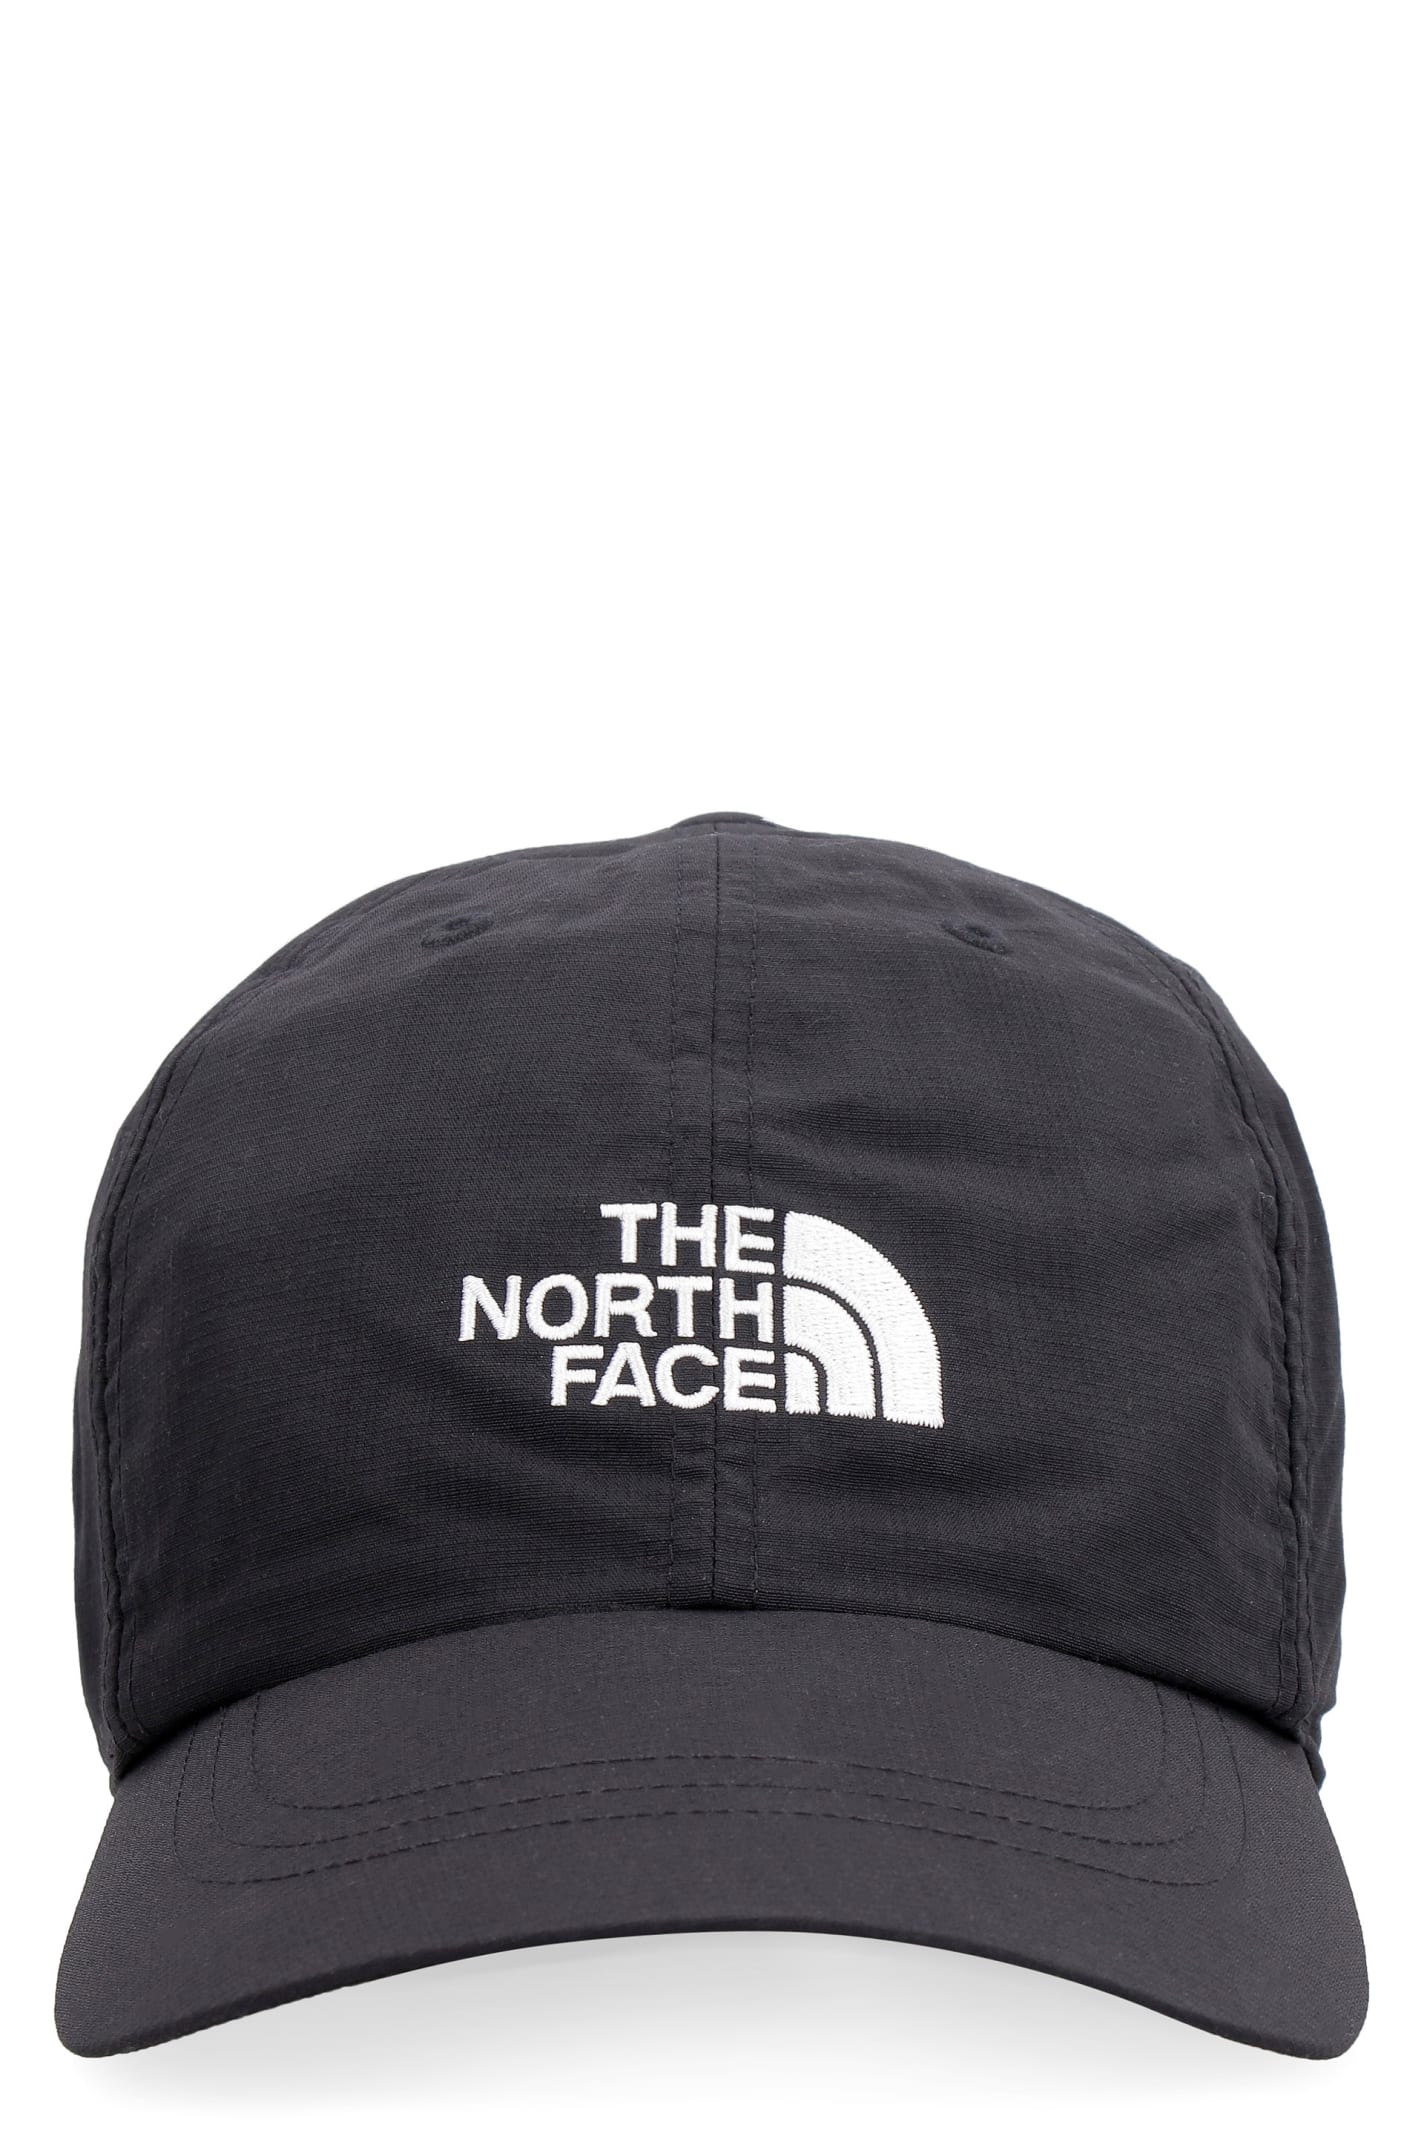 The North Face Nylon Hat